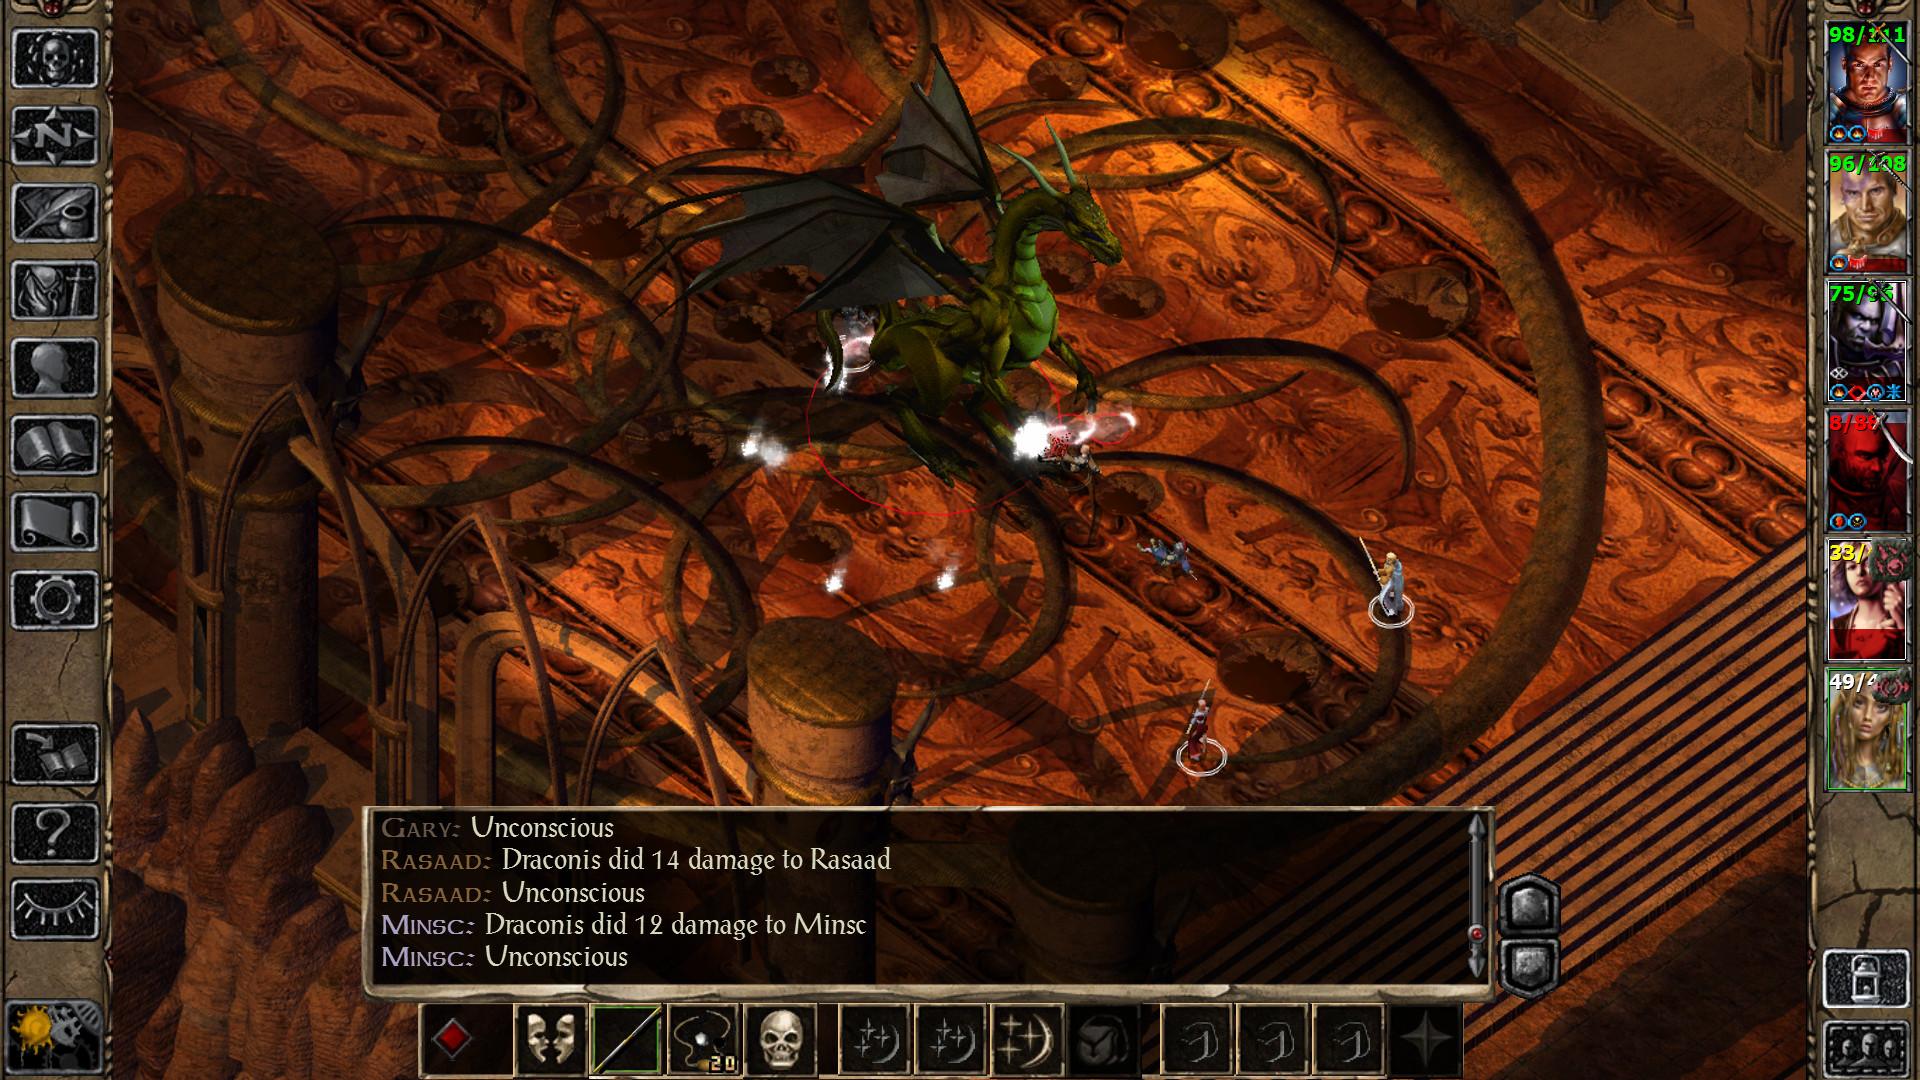 Screenshot №6 from game Baldur's Gate II: Enhanced Edition